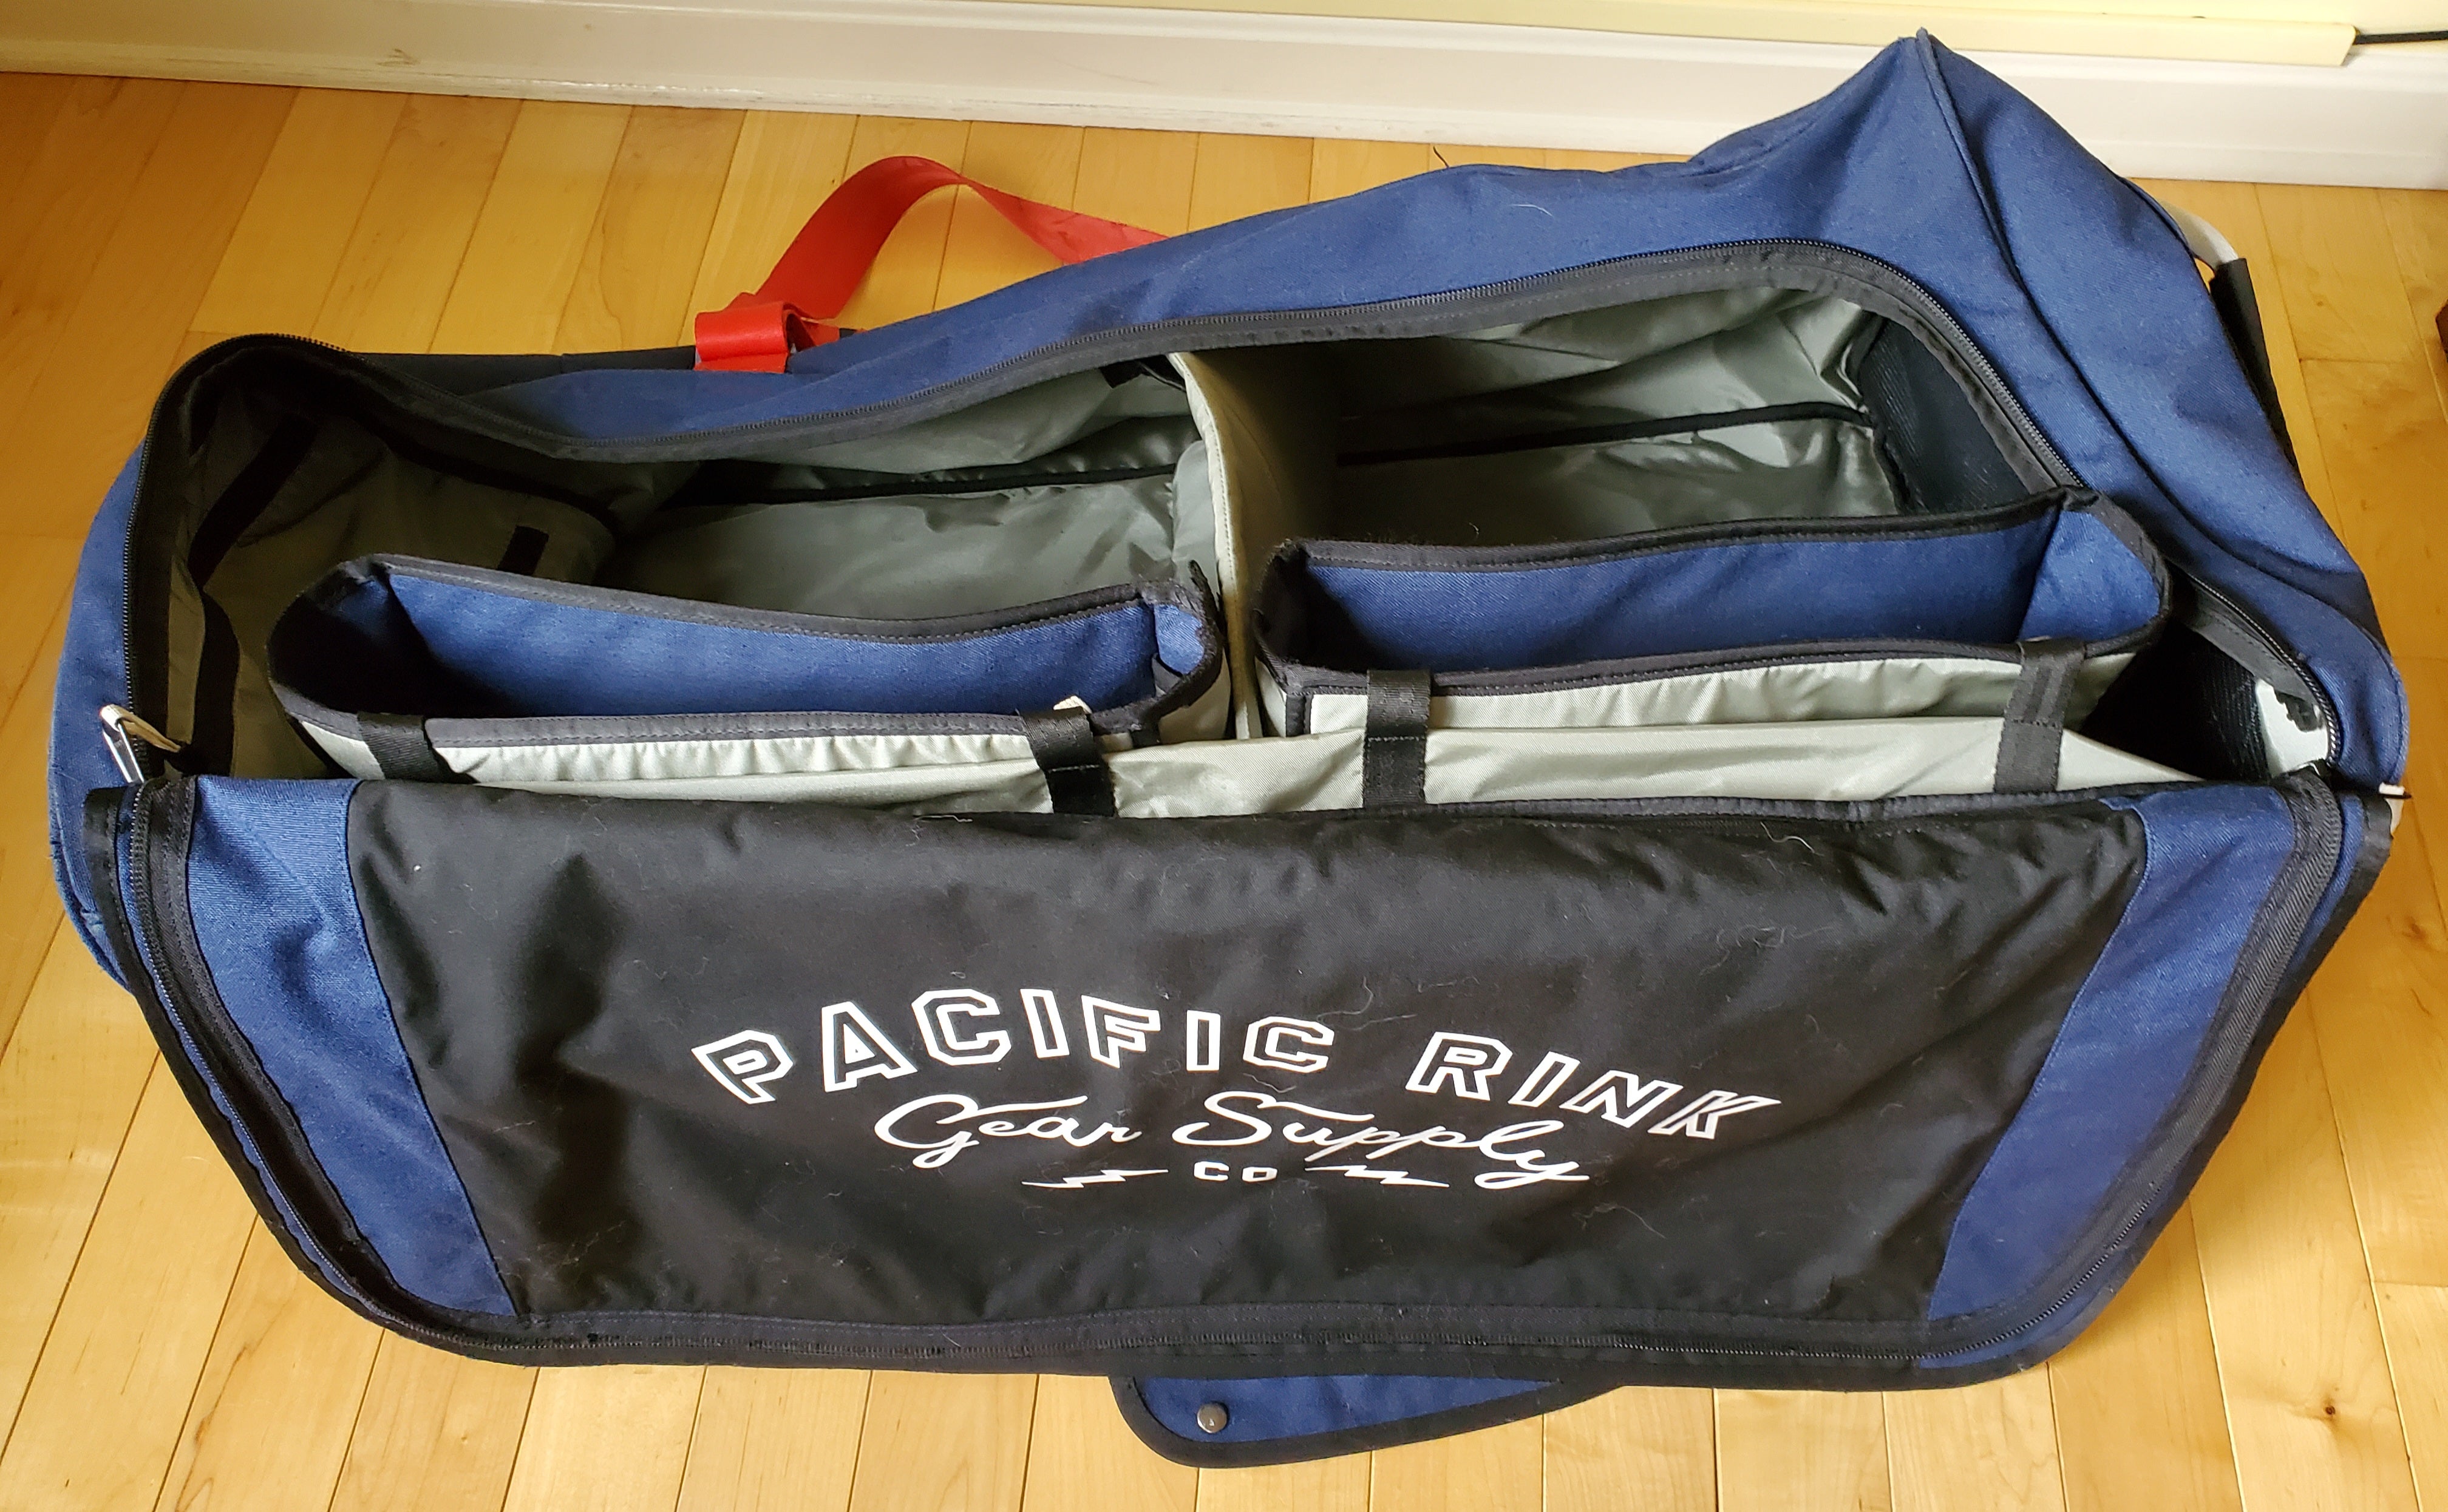 Pacific Rink player hockey bag